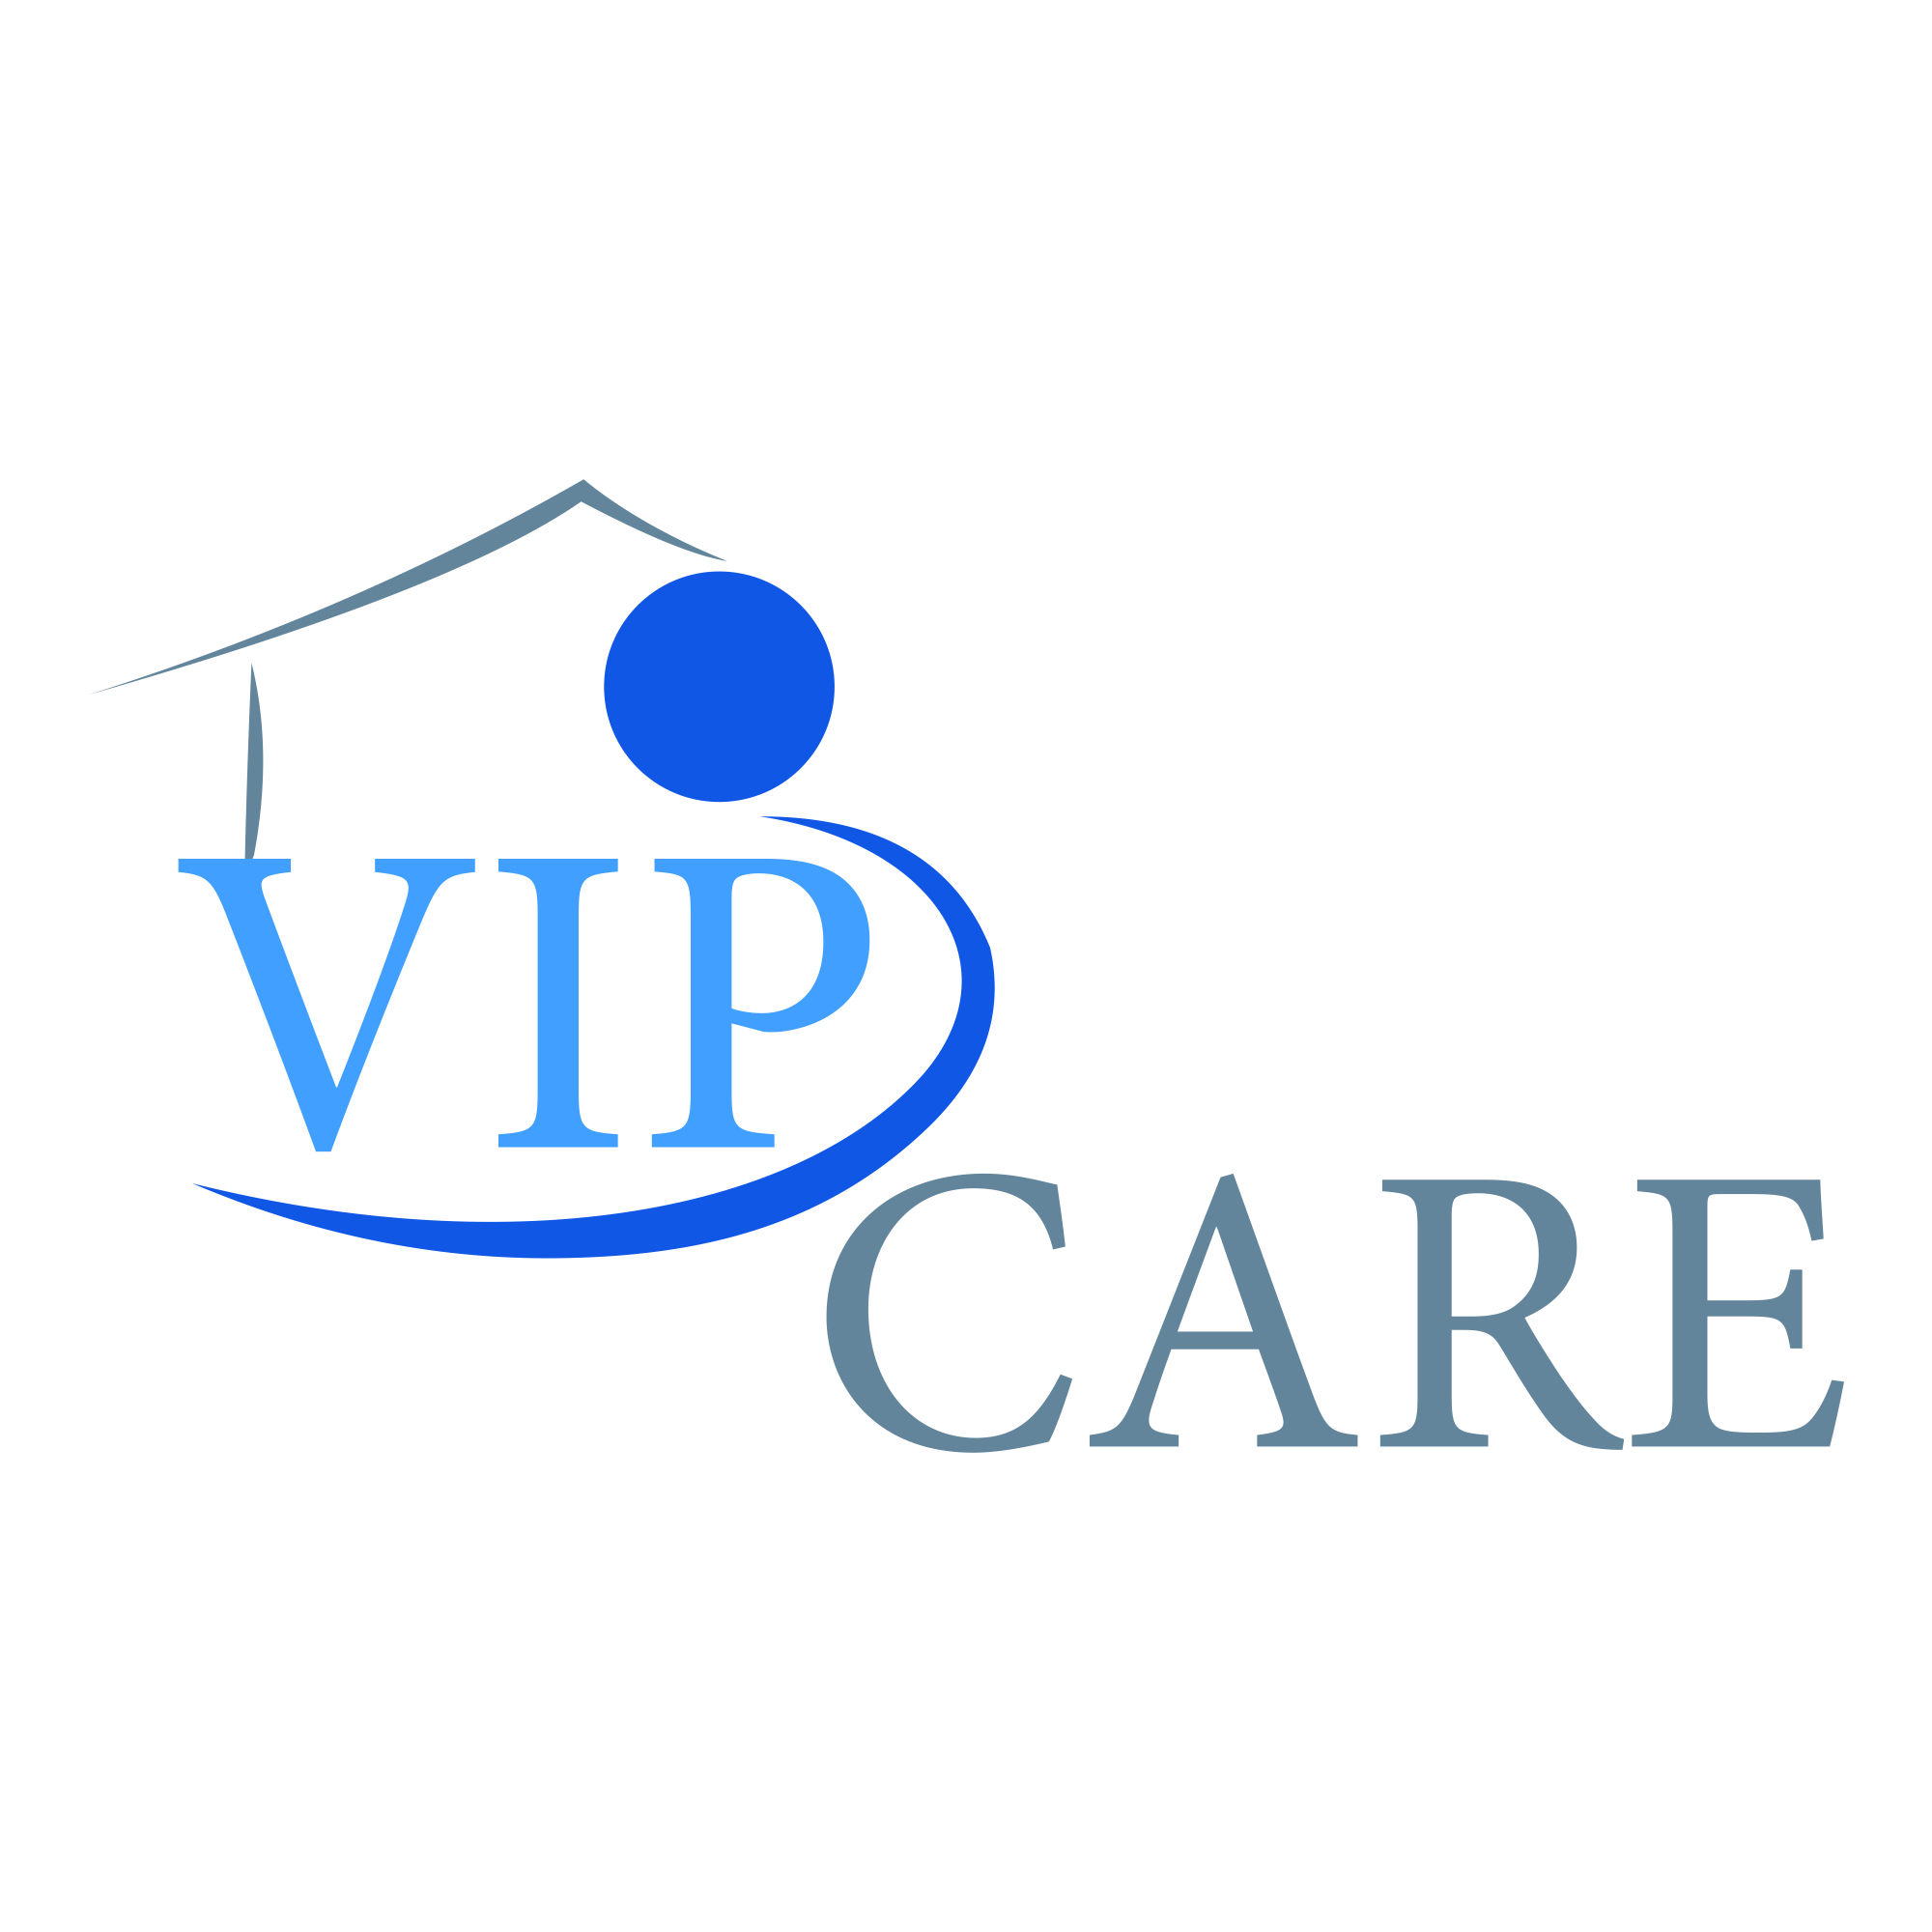 VIP Care Inc. at Fort Lauderdale, FL